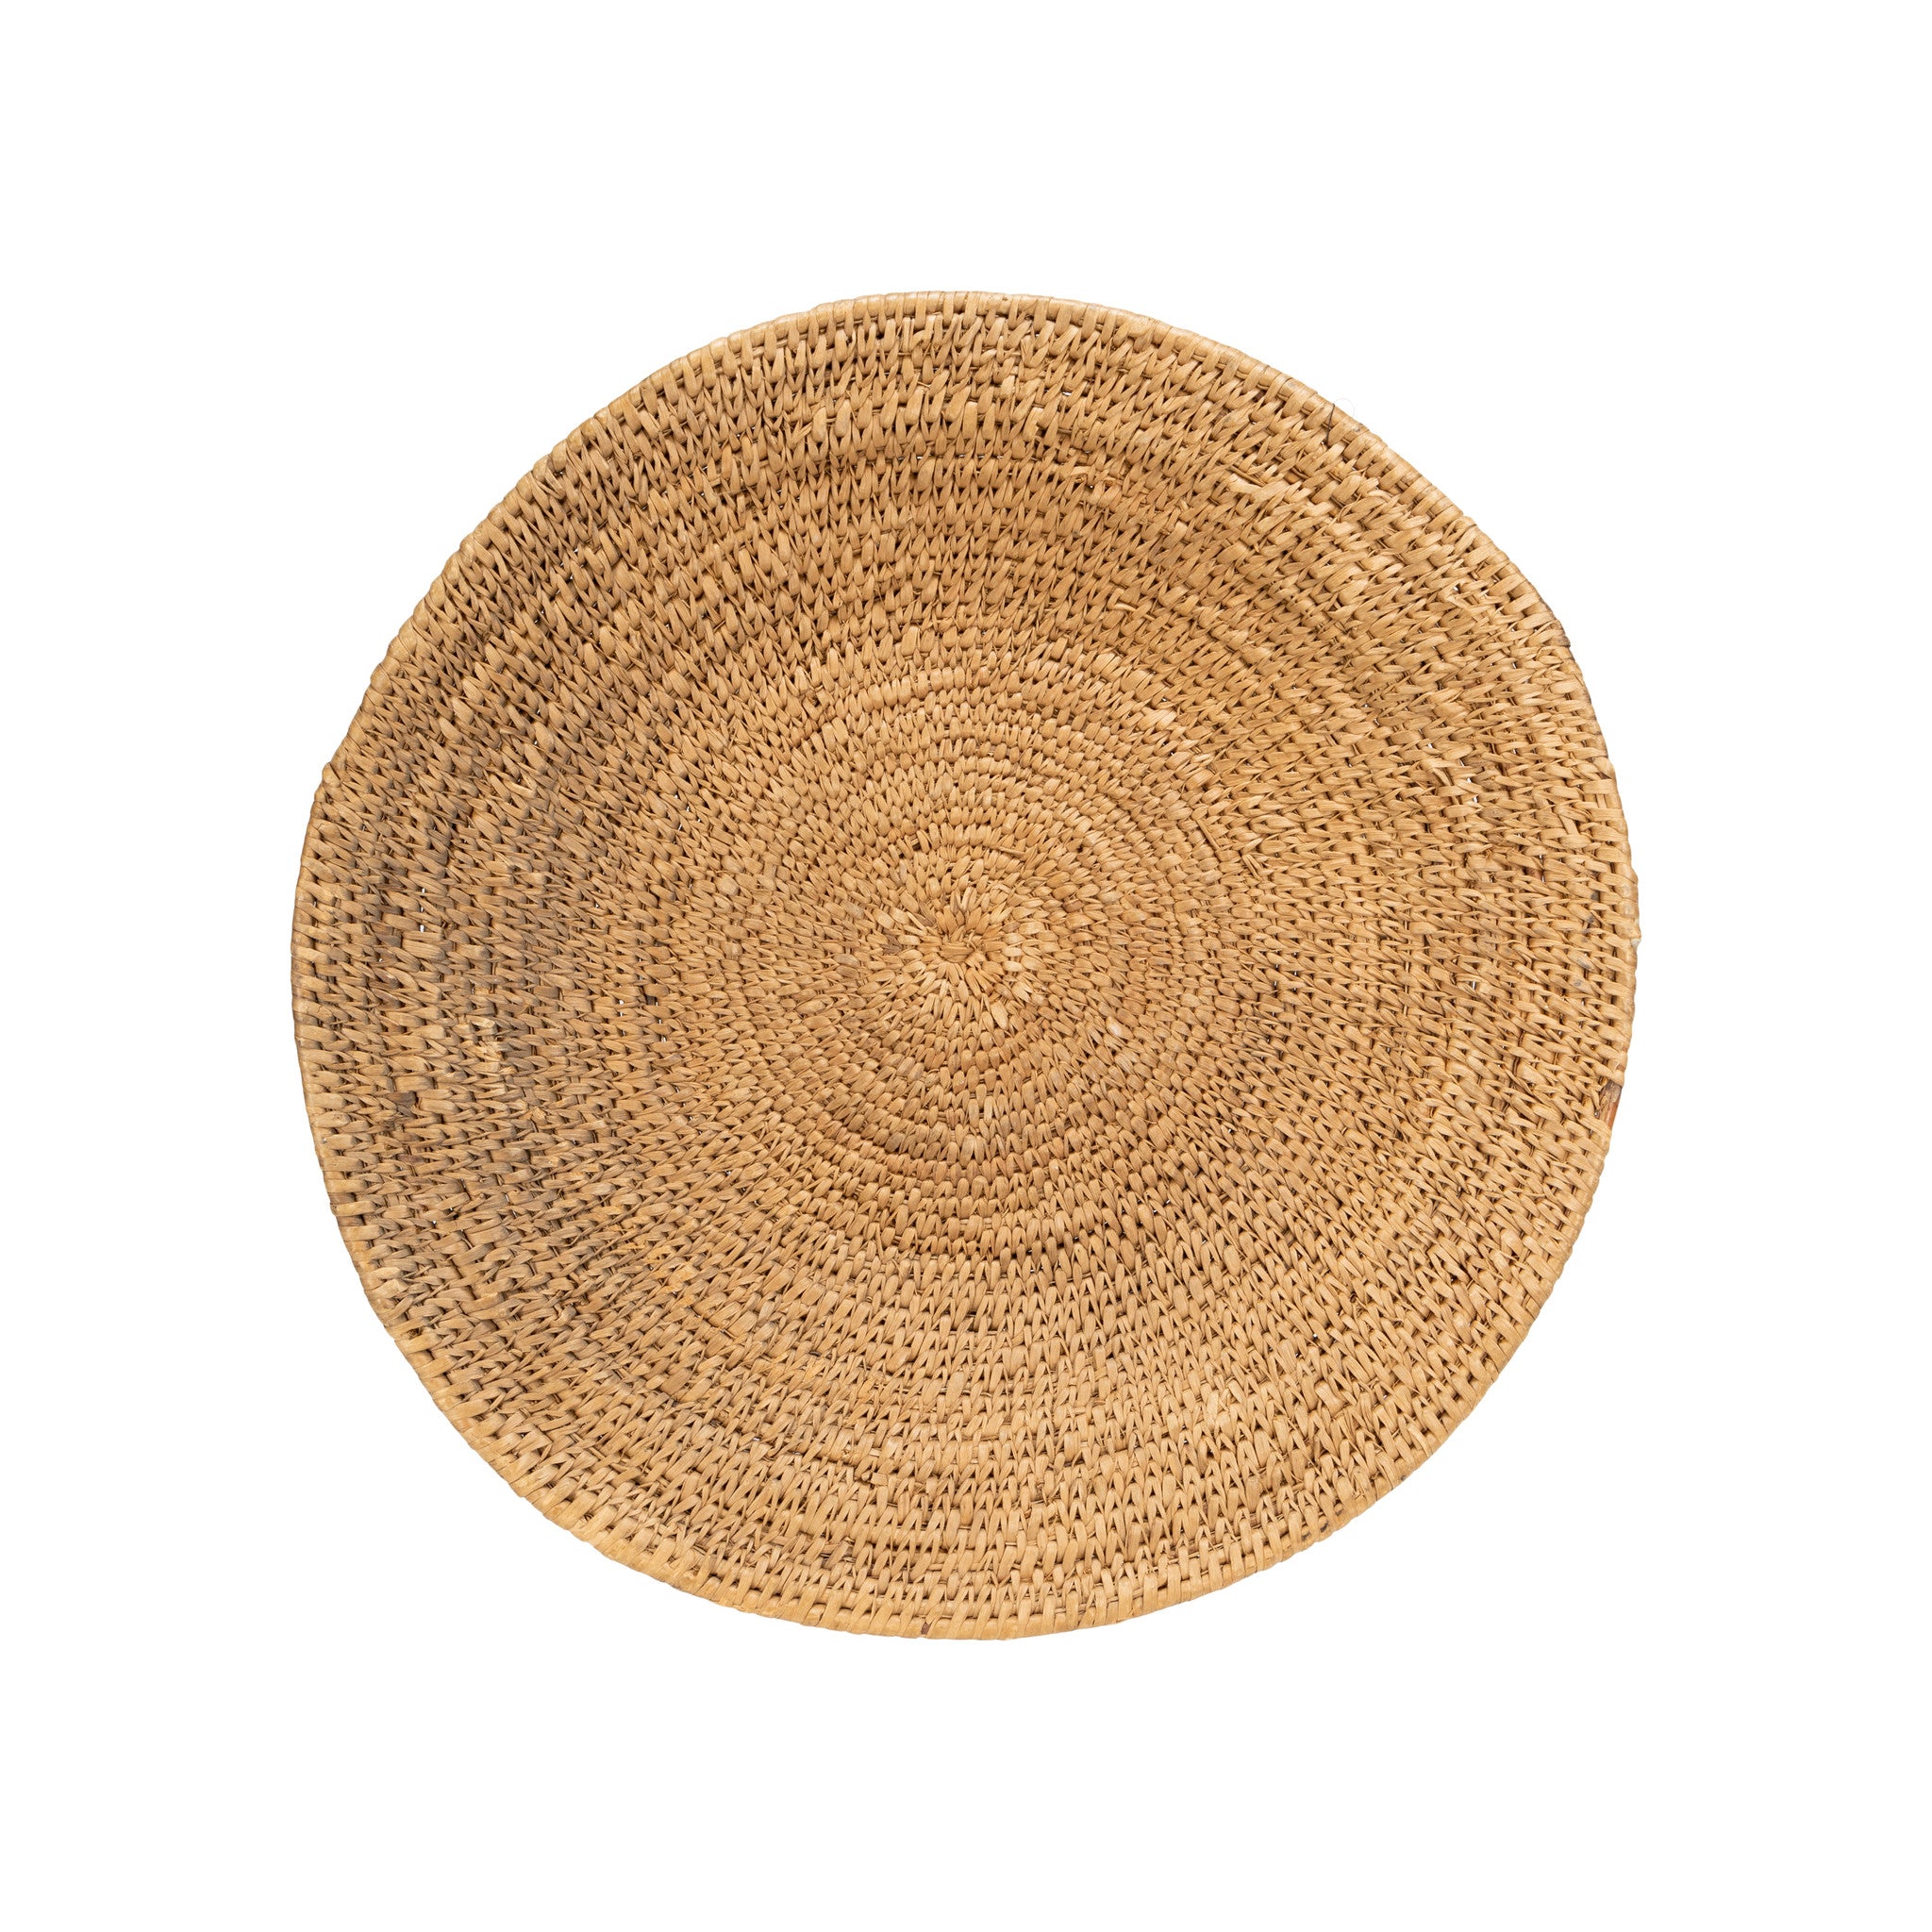 Ute Basketry Tray, Native, Basketry, Plate